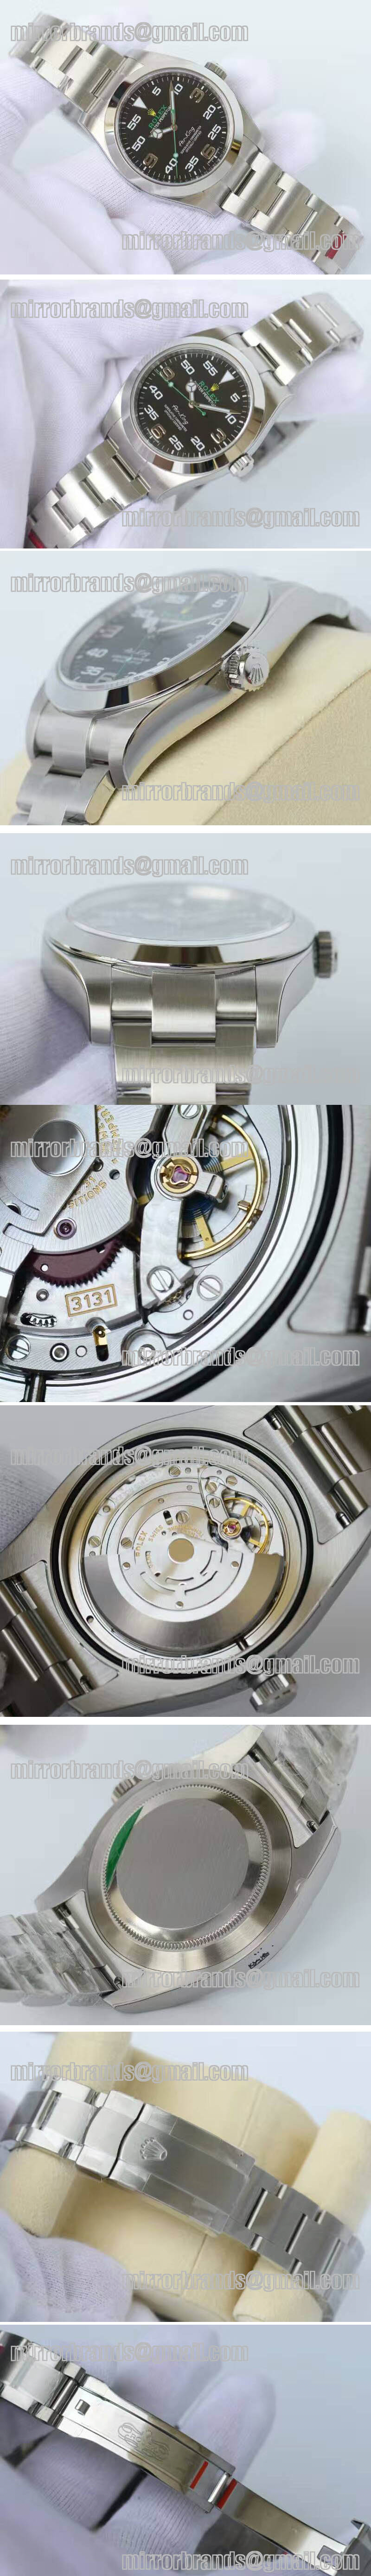 Replica Rolex Air King Watches